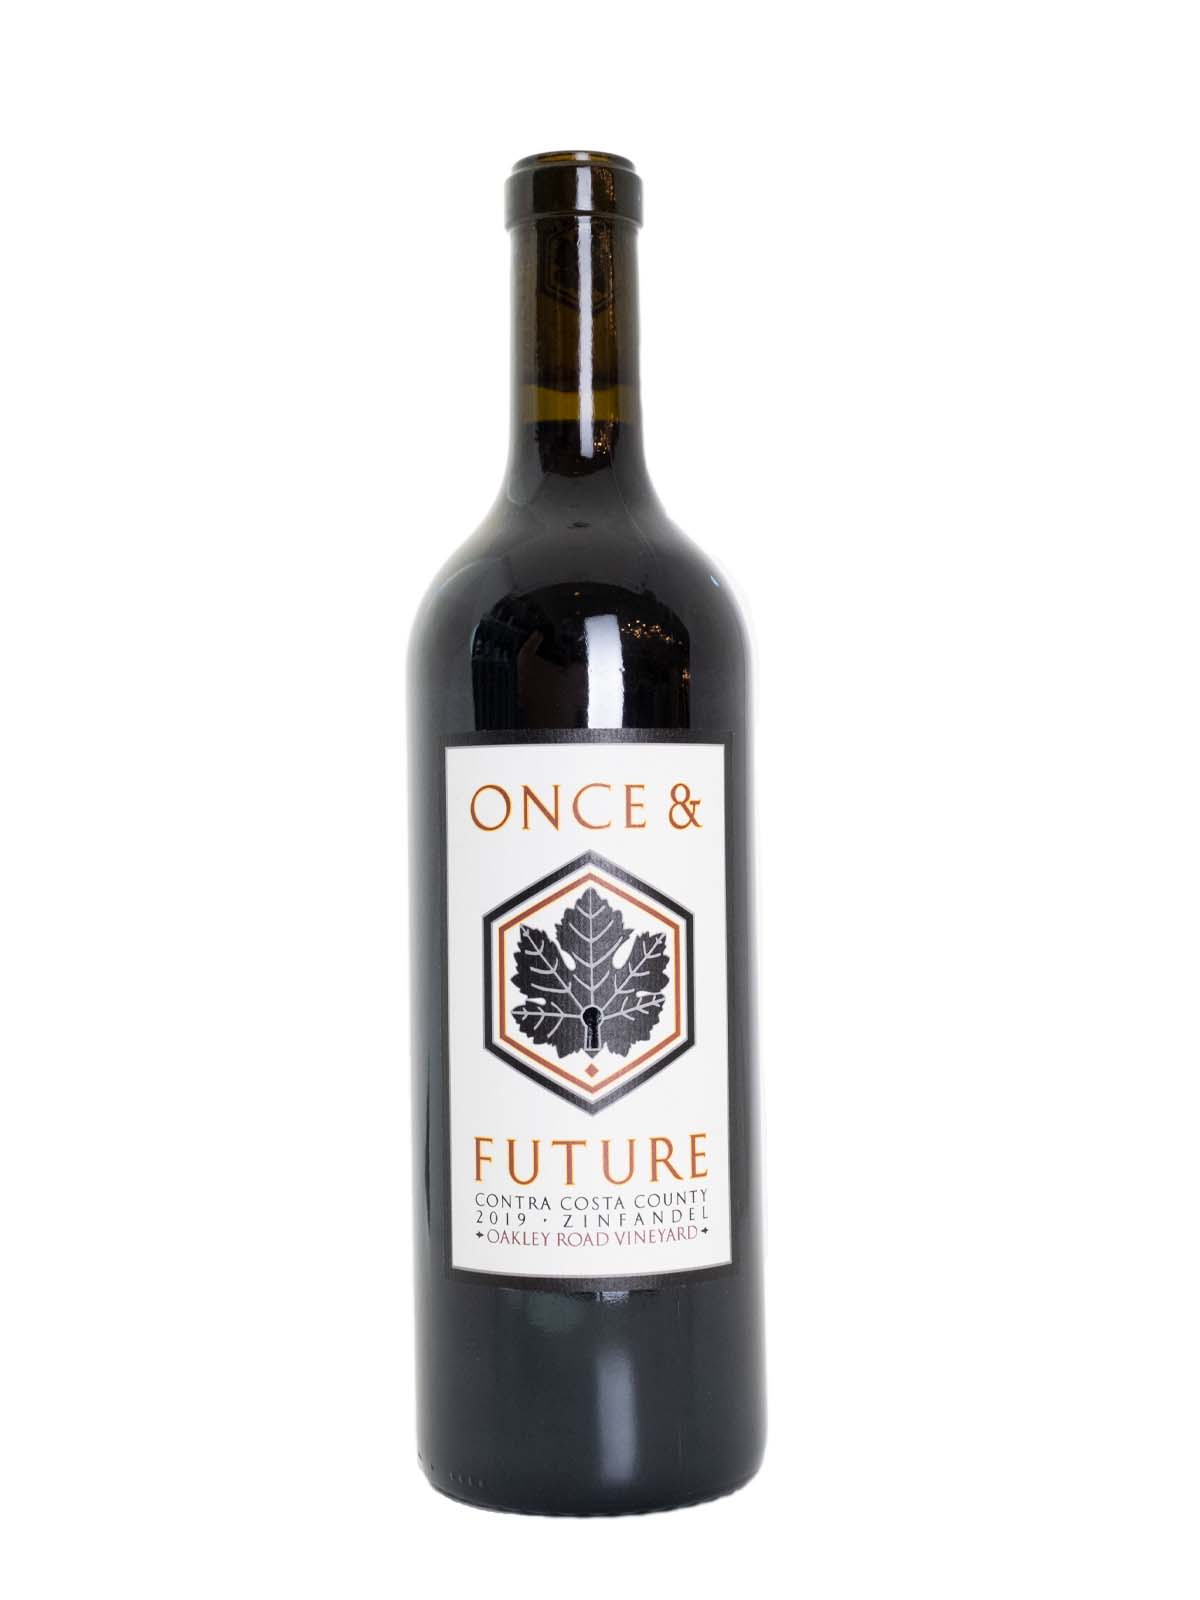 *7R* 2019 Once & Future "Oakley Road Vineyard" Old Vine Zinfandel (Contra Costa, CA)